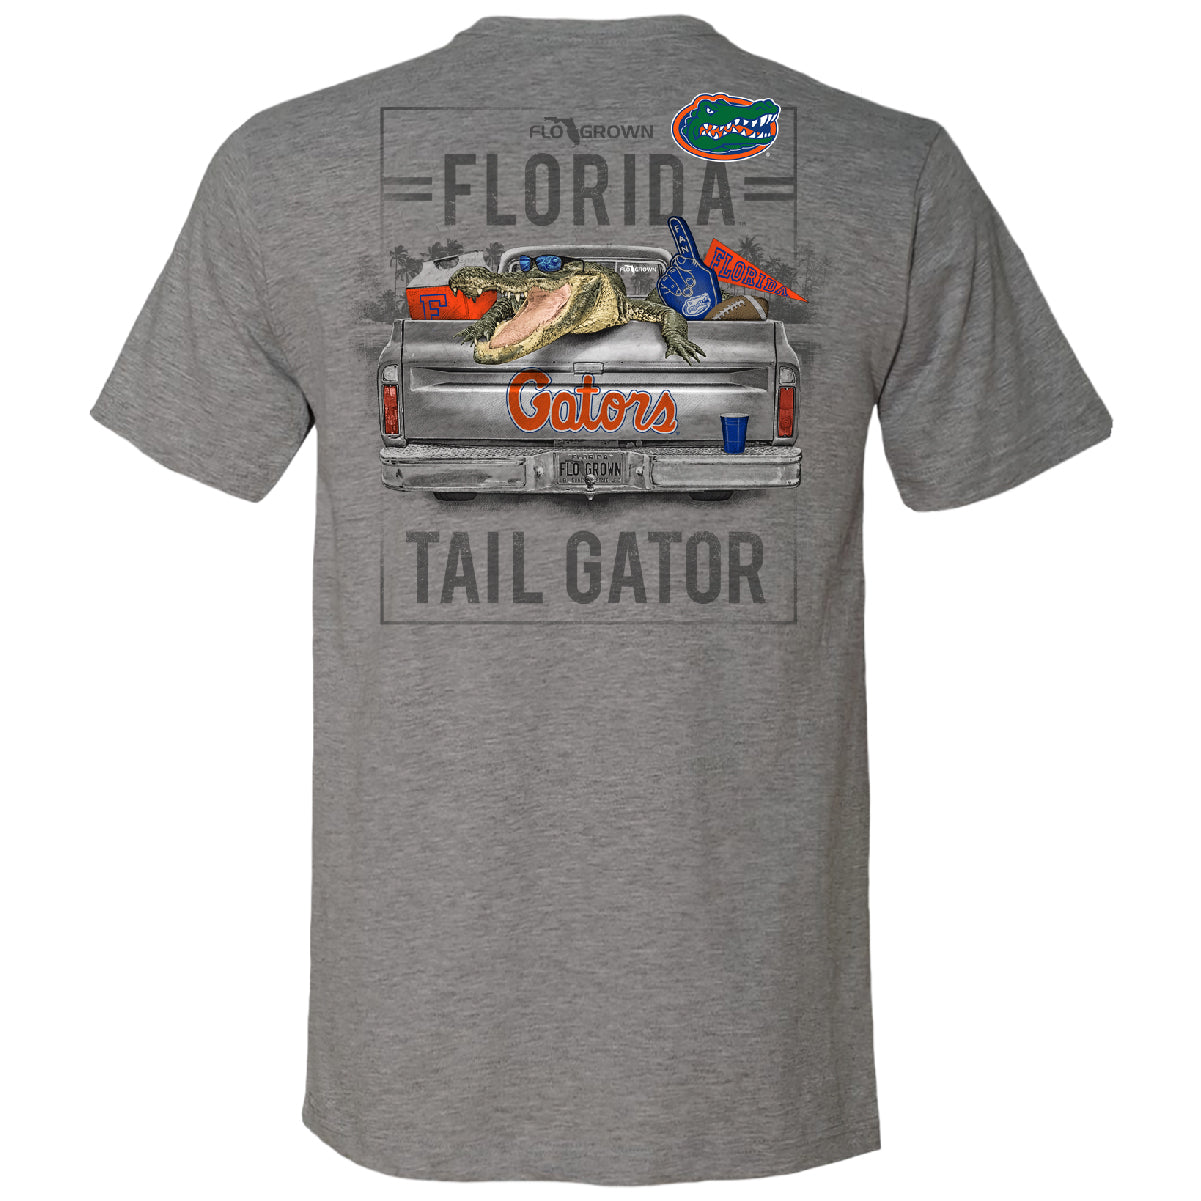 Florida Gators Tail Gator Tee - Back